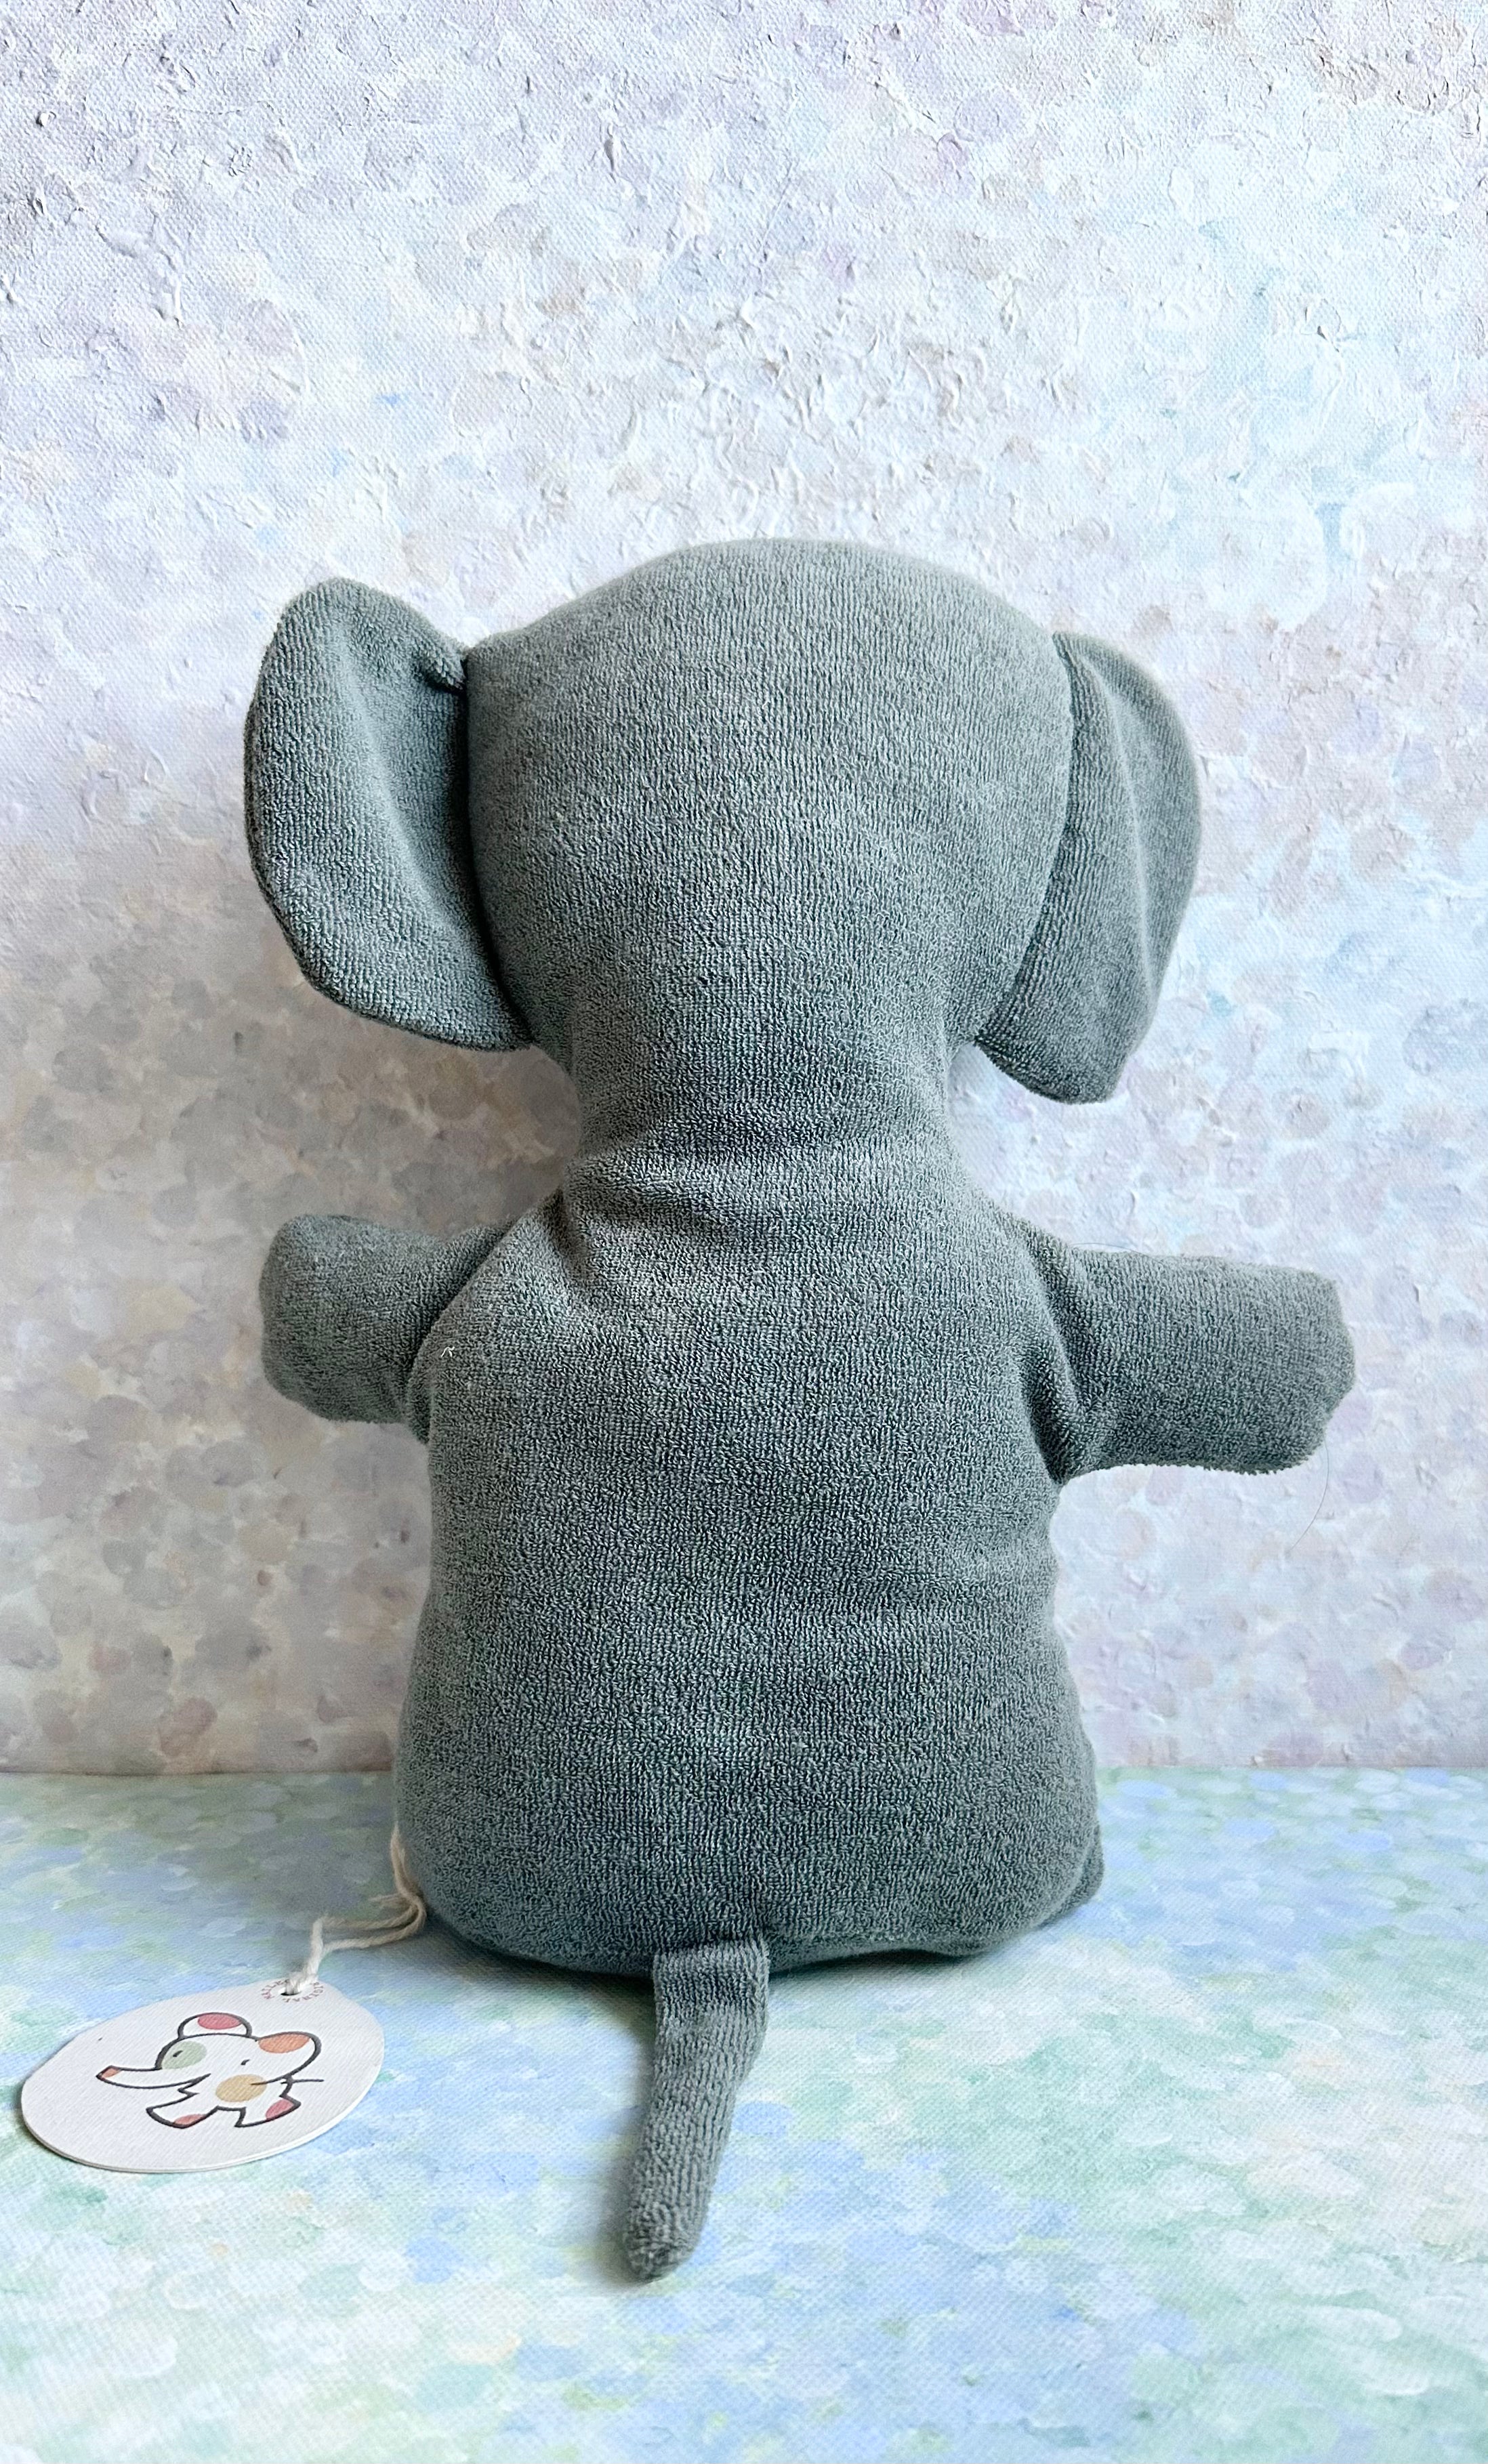 Elephant - 2011